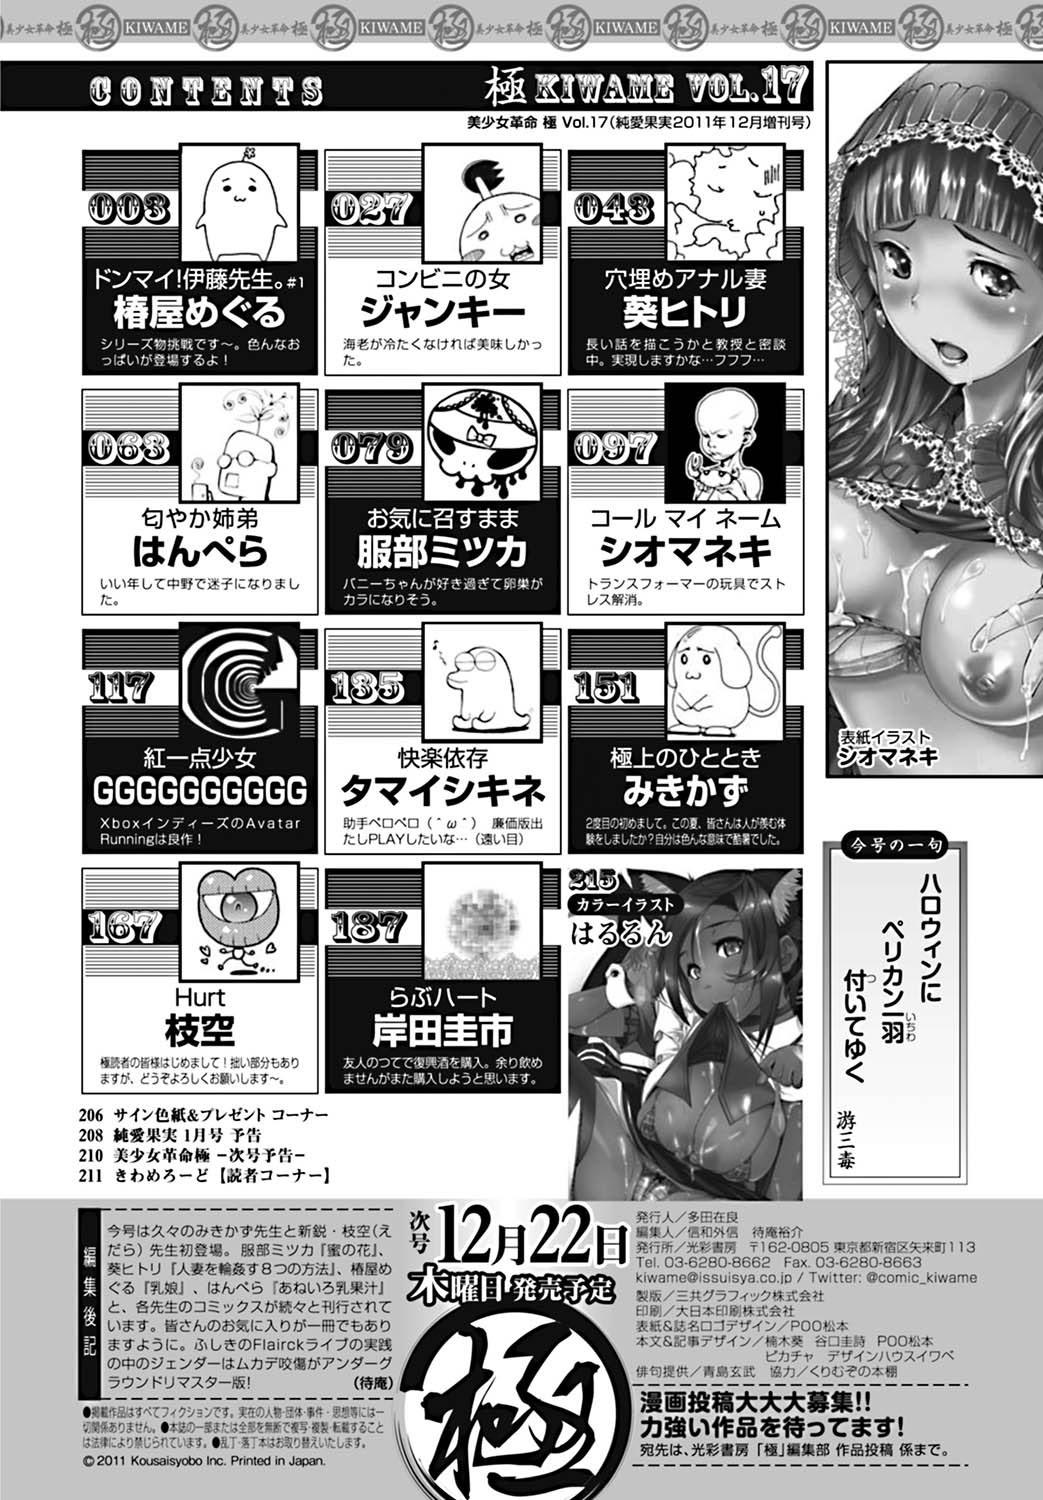 Bishoujo Kakumei KIWAME 2011-12 Vol.17 Digital 213